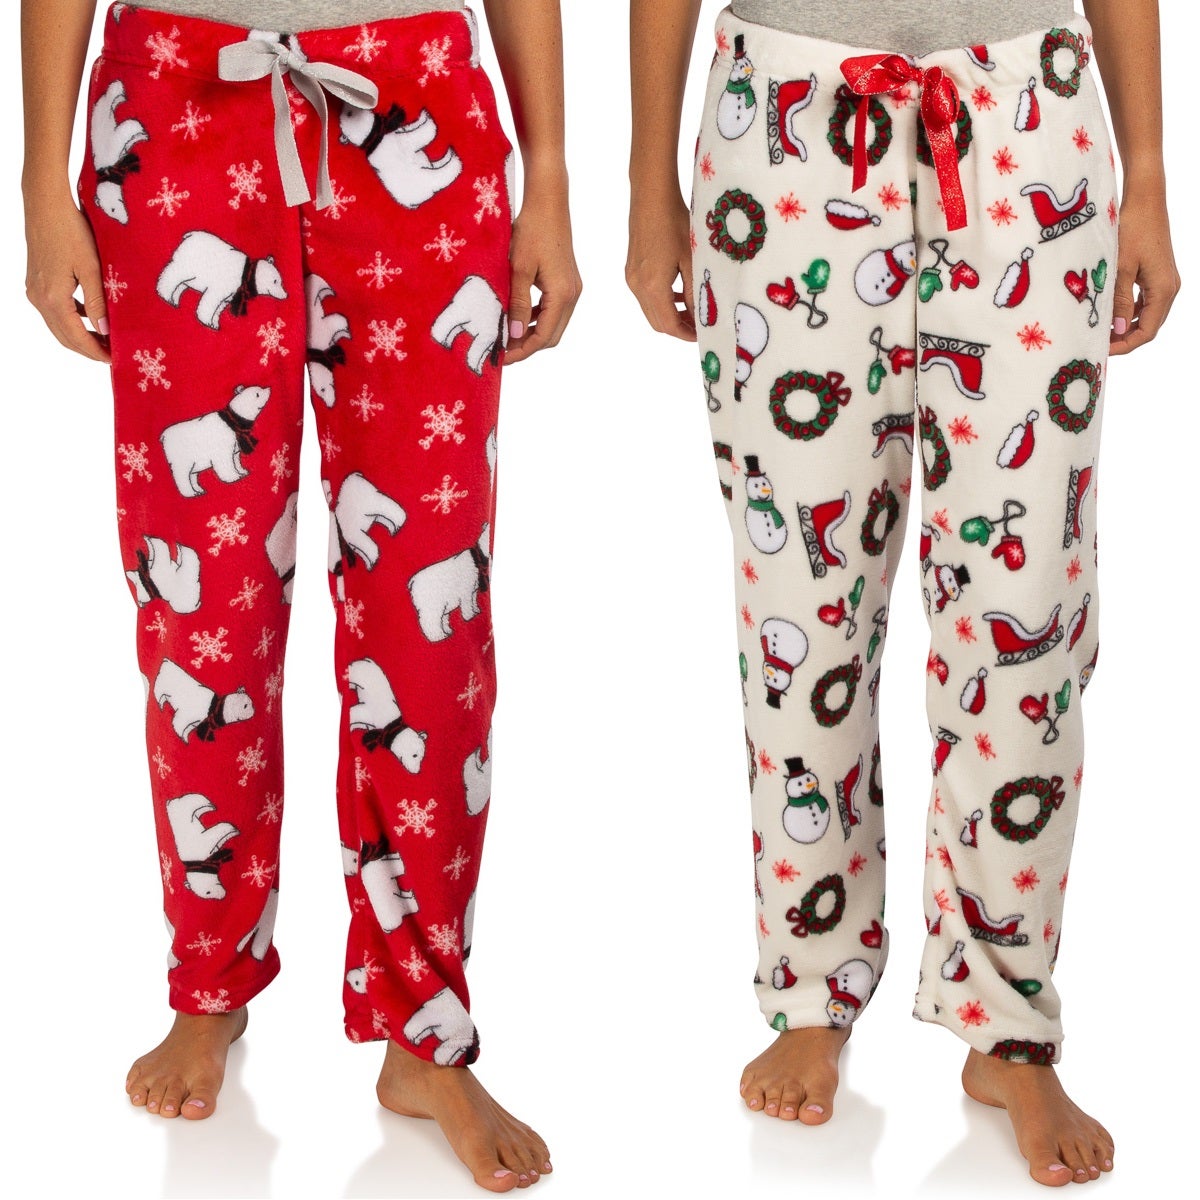 NYC Underground Women’s Pajama Lounge Pants – Super Soft Plush